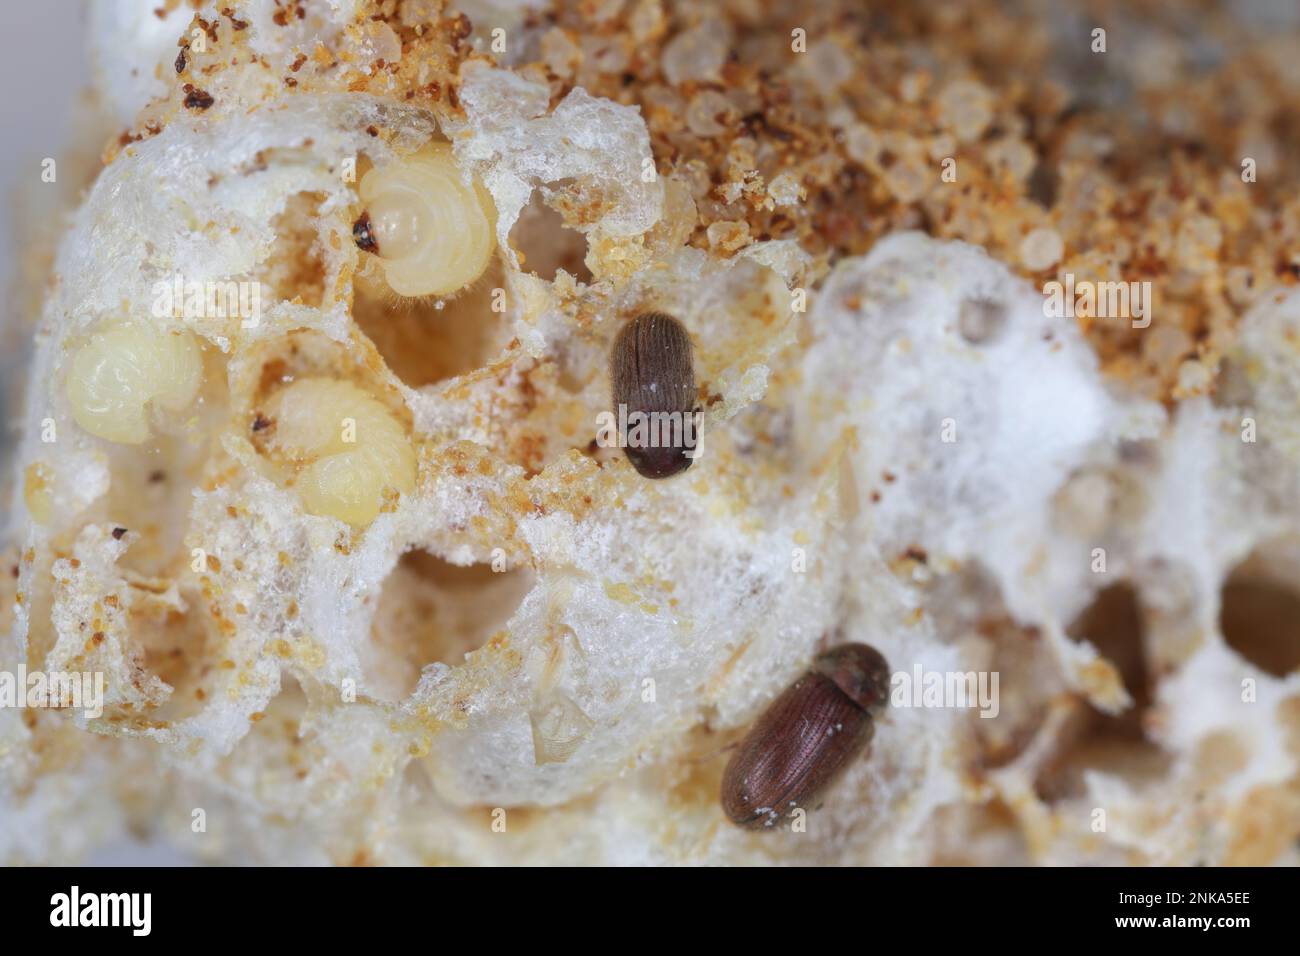 Biscuit, drugstore or bread beetle (Stegobium paniceum) larvae and adults - beetle stored product pest on cookie debris. Stock Photo